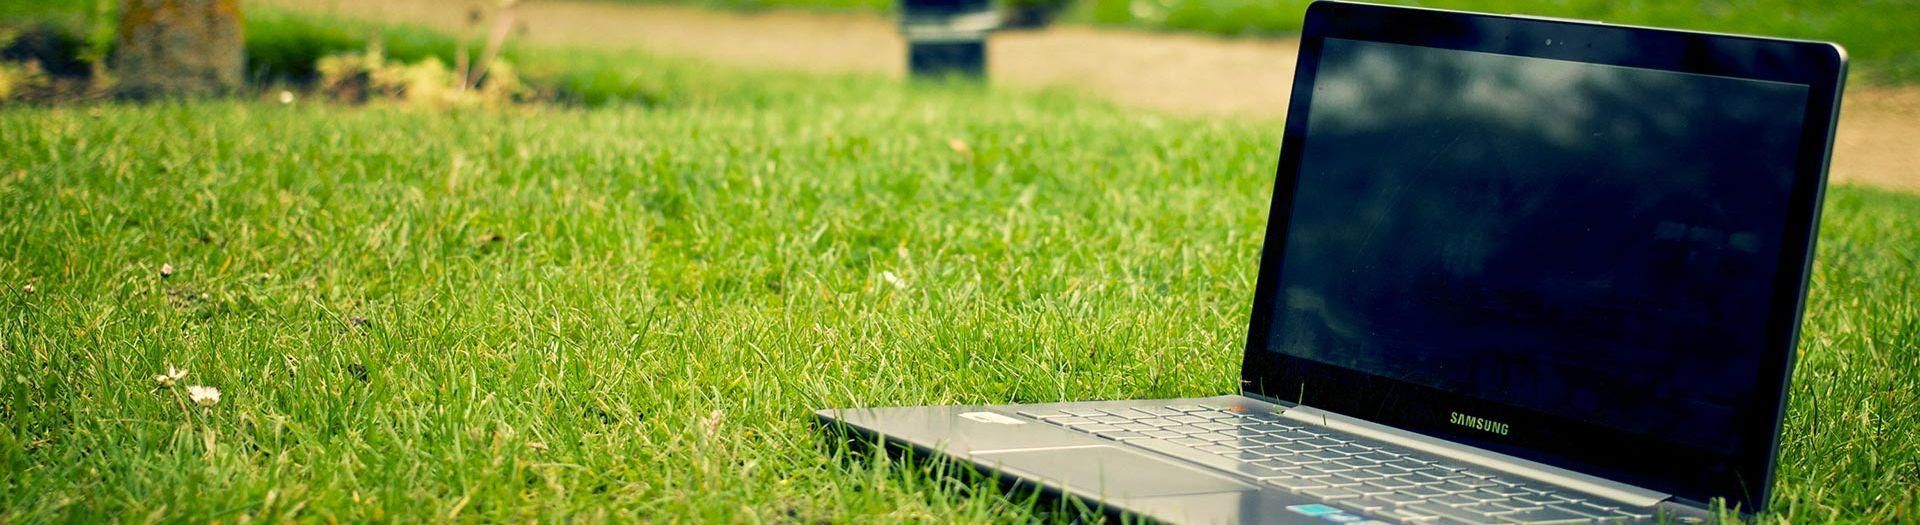 laptop-notebook-grass-meadow-1c6fa79c Maatwerk Portaal | BRIGHT Software B.V.